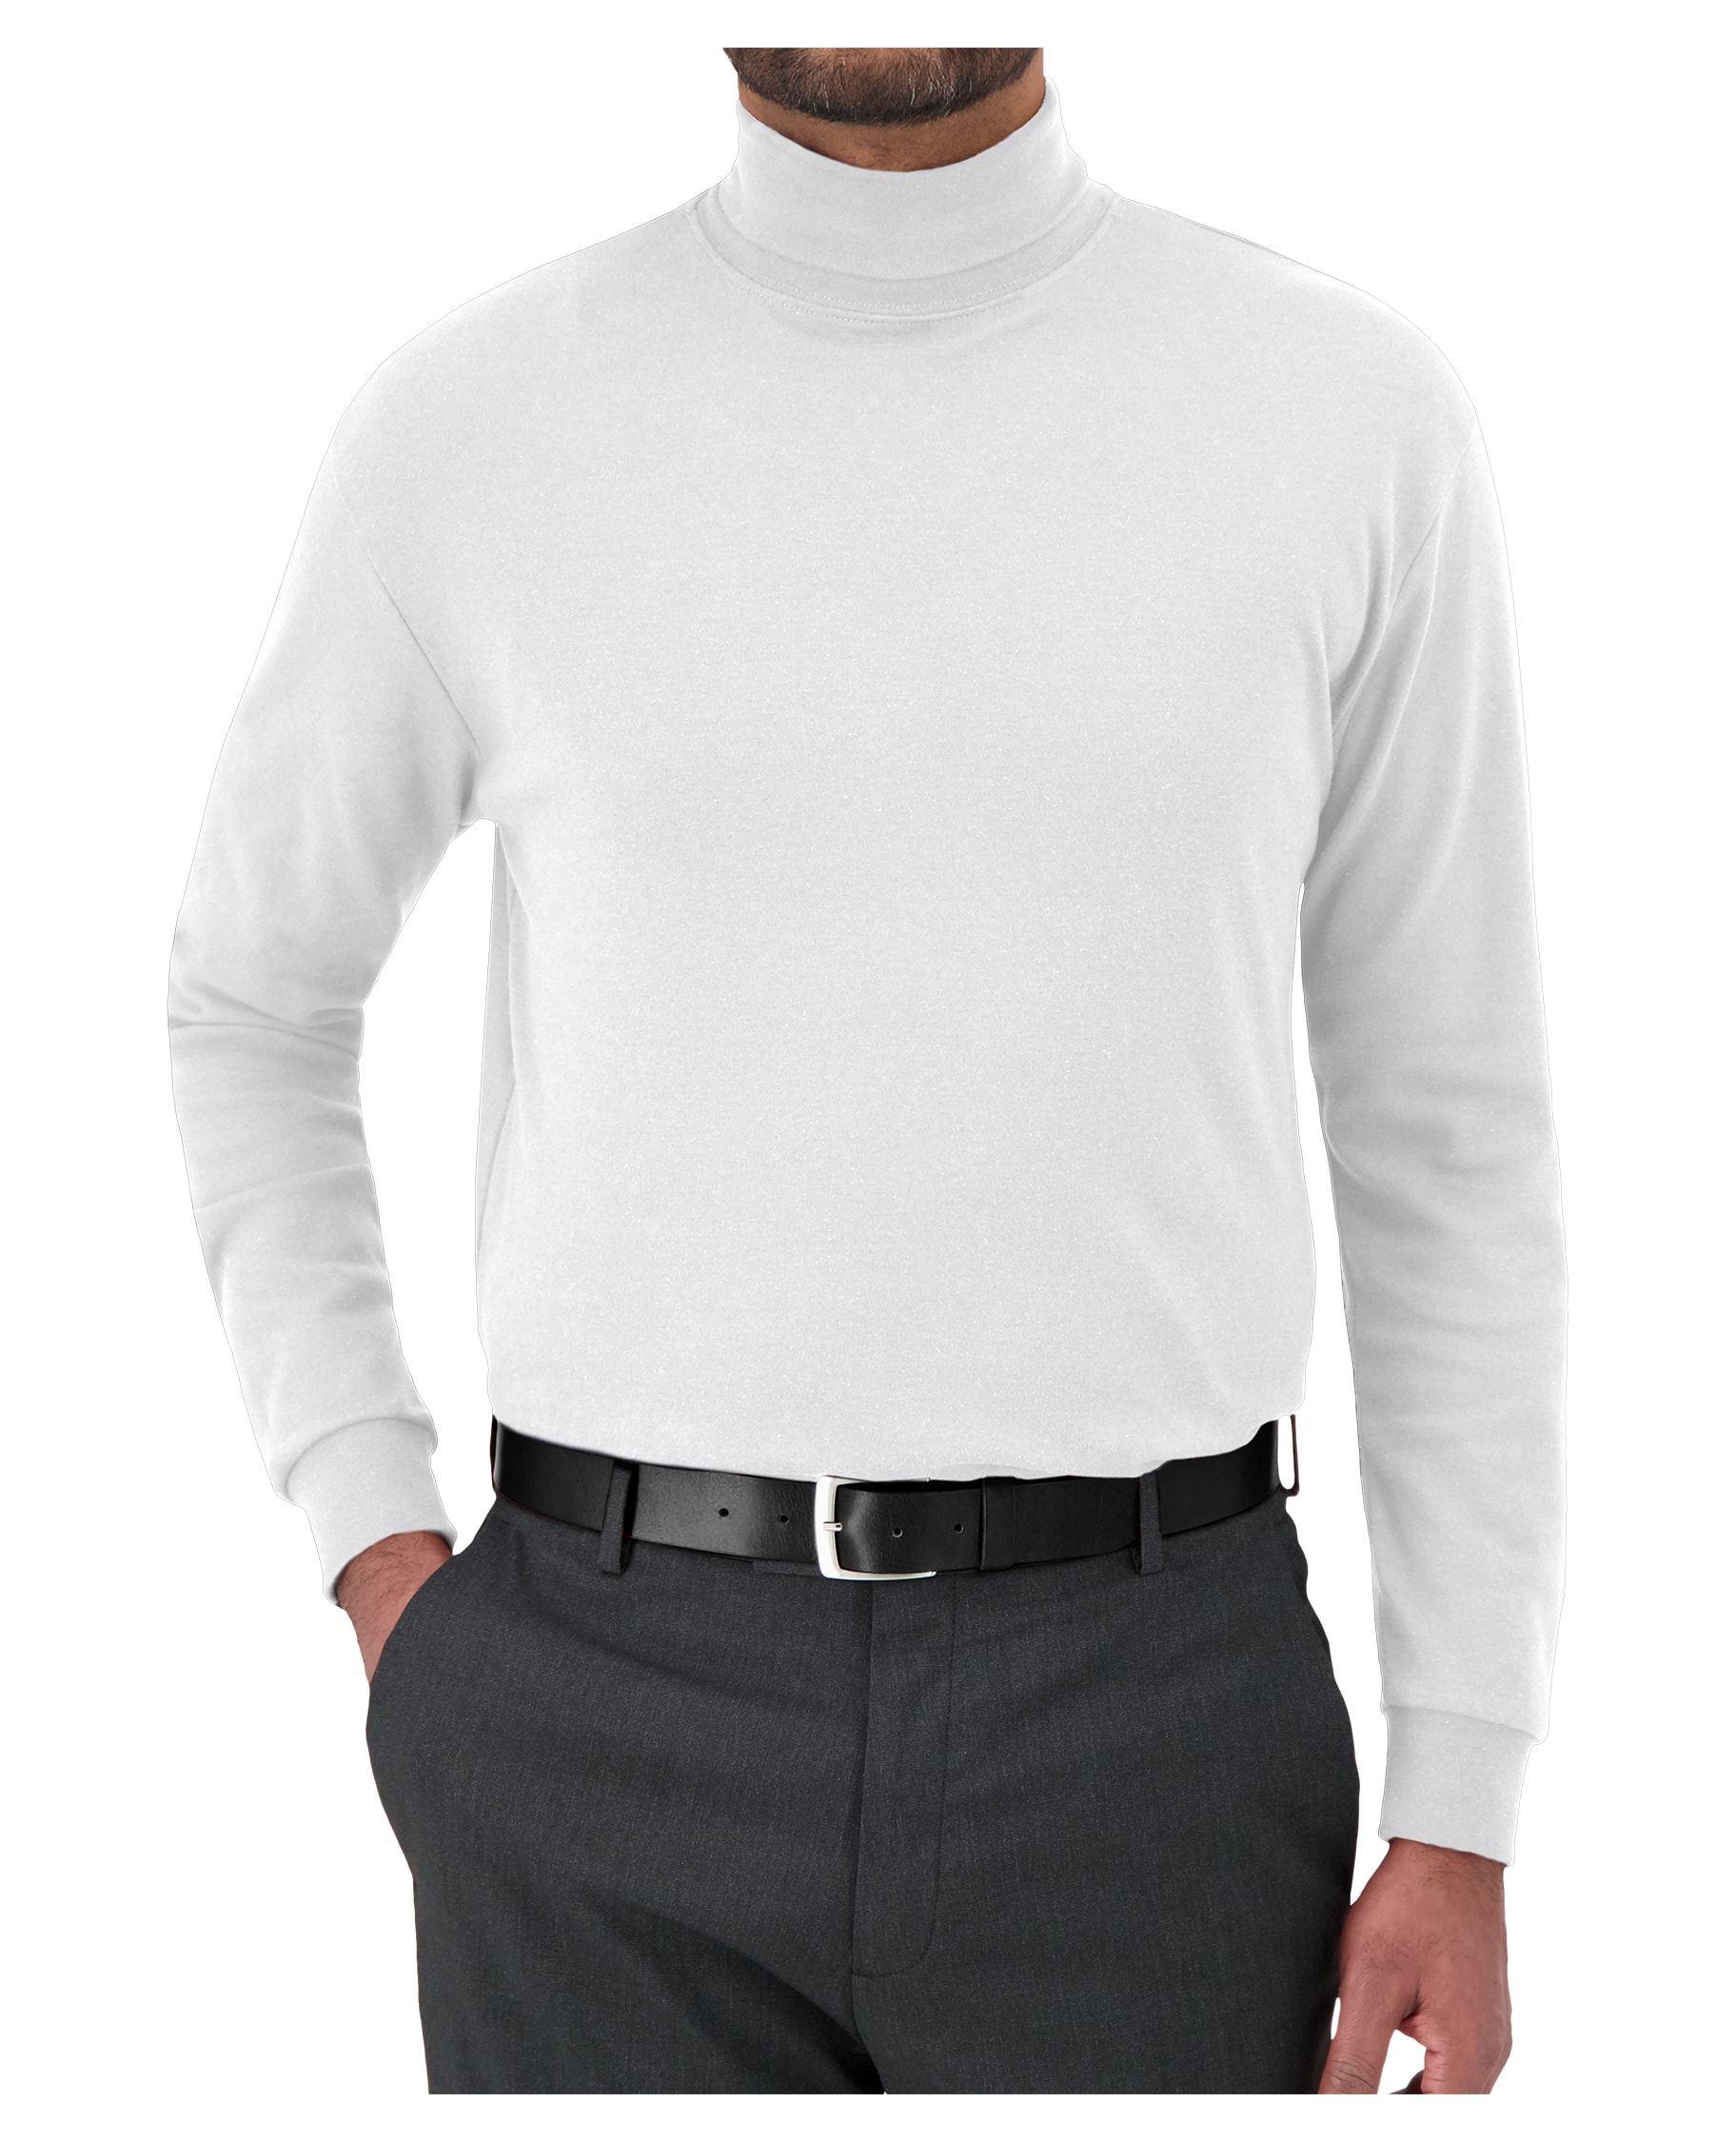 white mock neck sweater